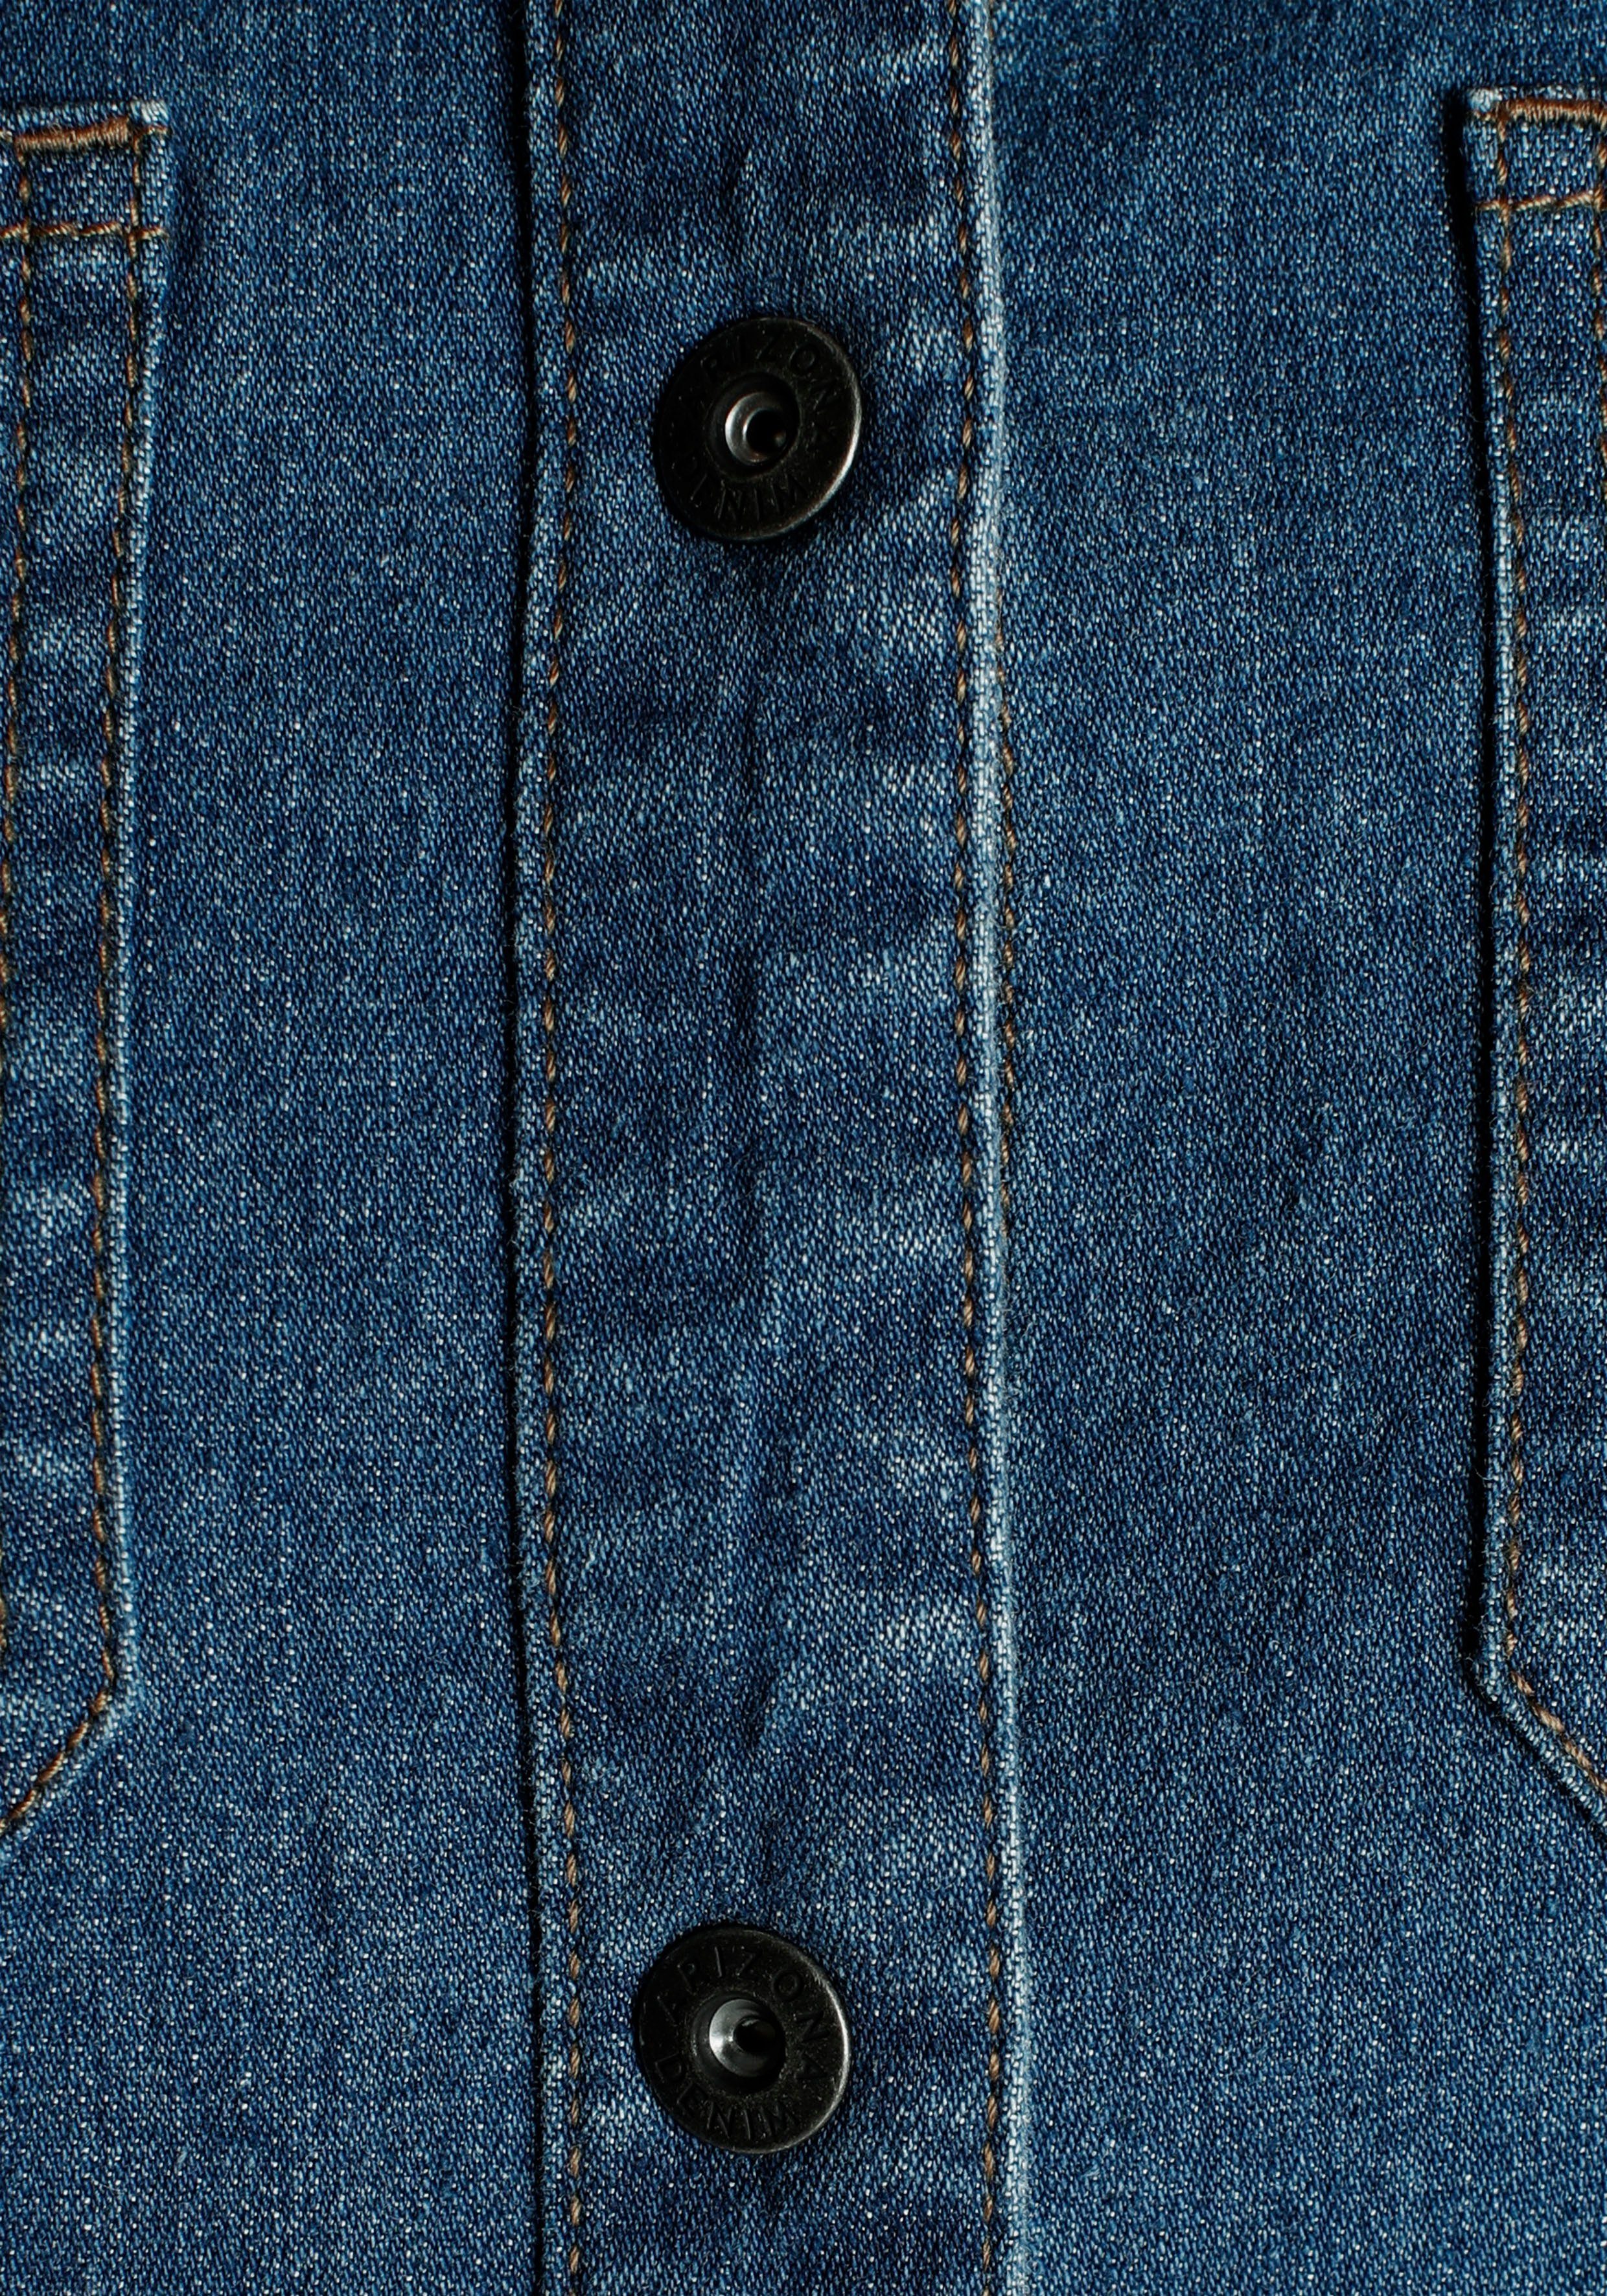 Hemdjacke blue Shacket Jeansjacke - Denim Weiter dark Arizona geschnitten used